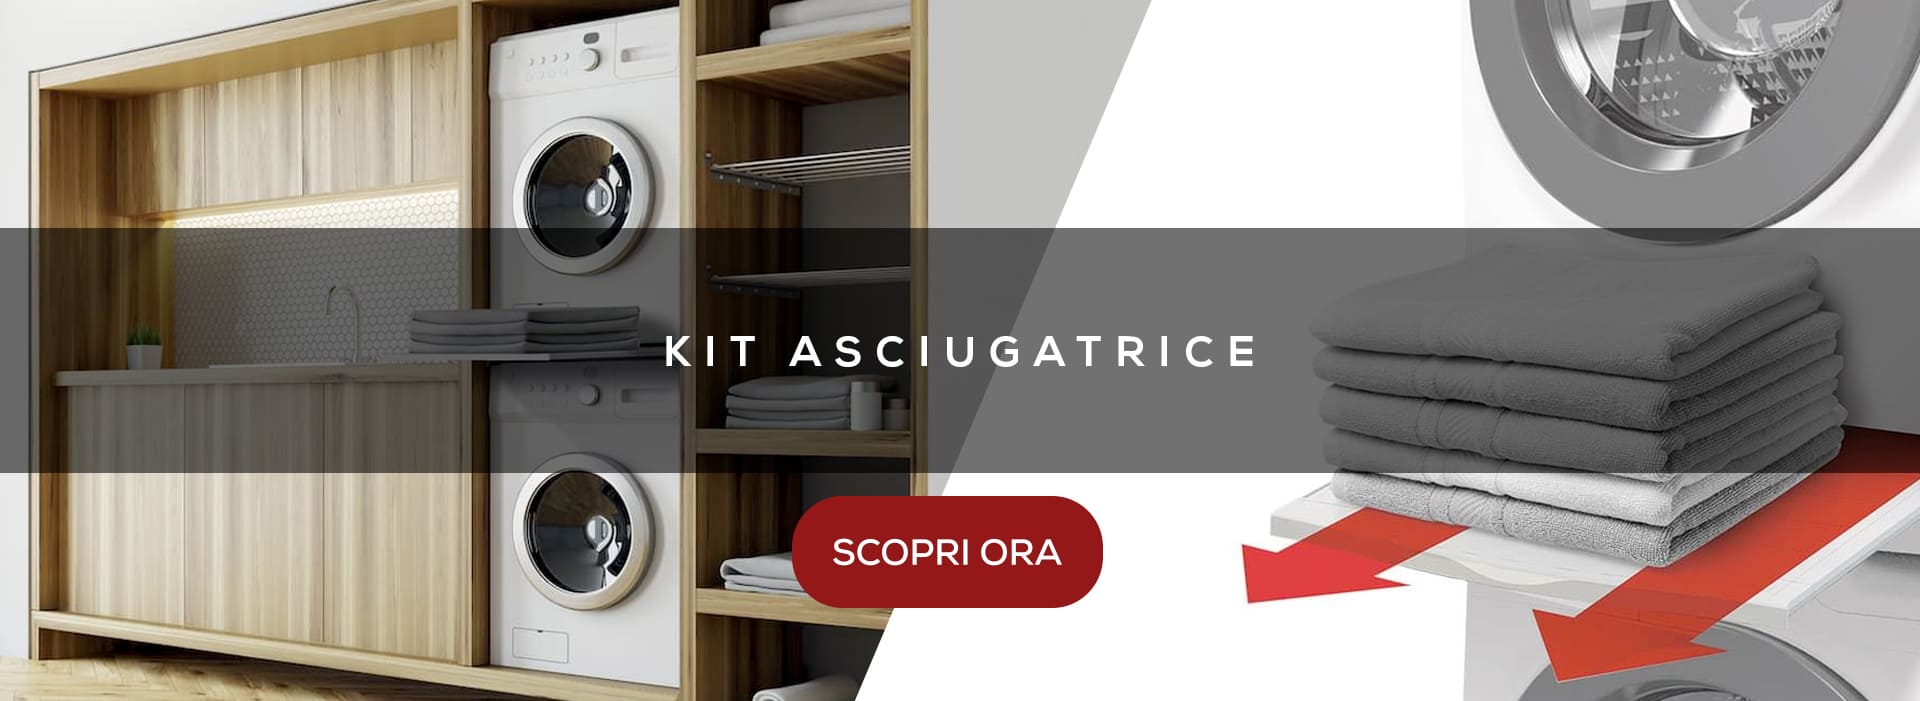 Slide Kit Asciugatrice